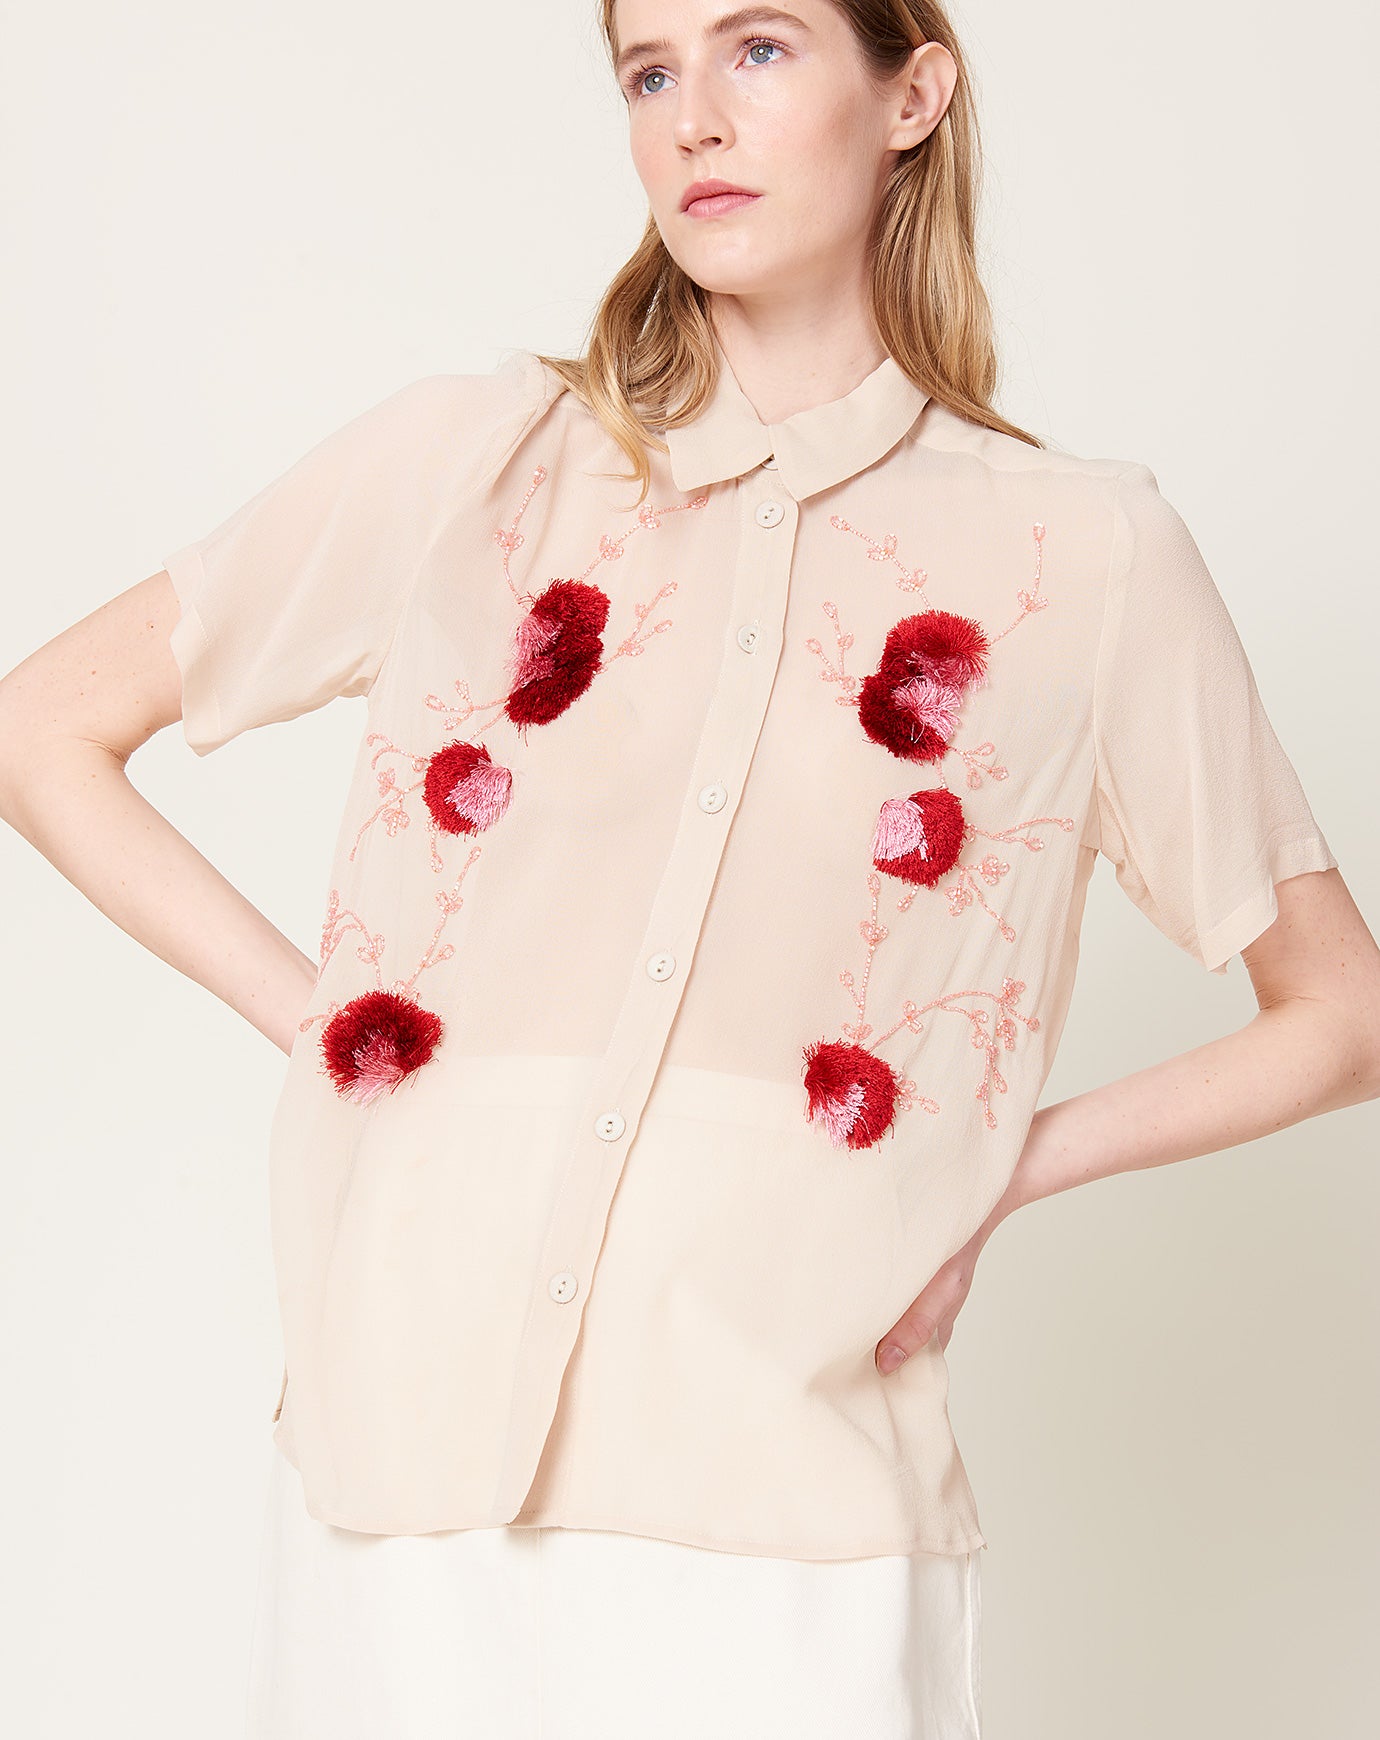 Rachel Comey Eyana Shirt in Ivory Beaded Floral